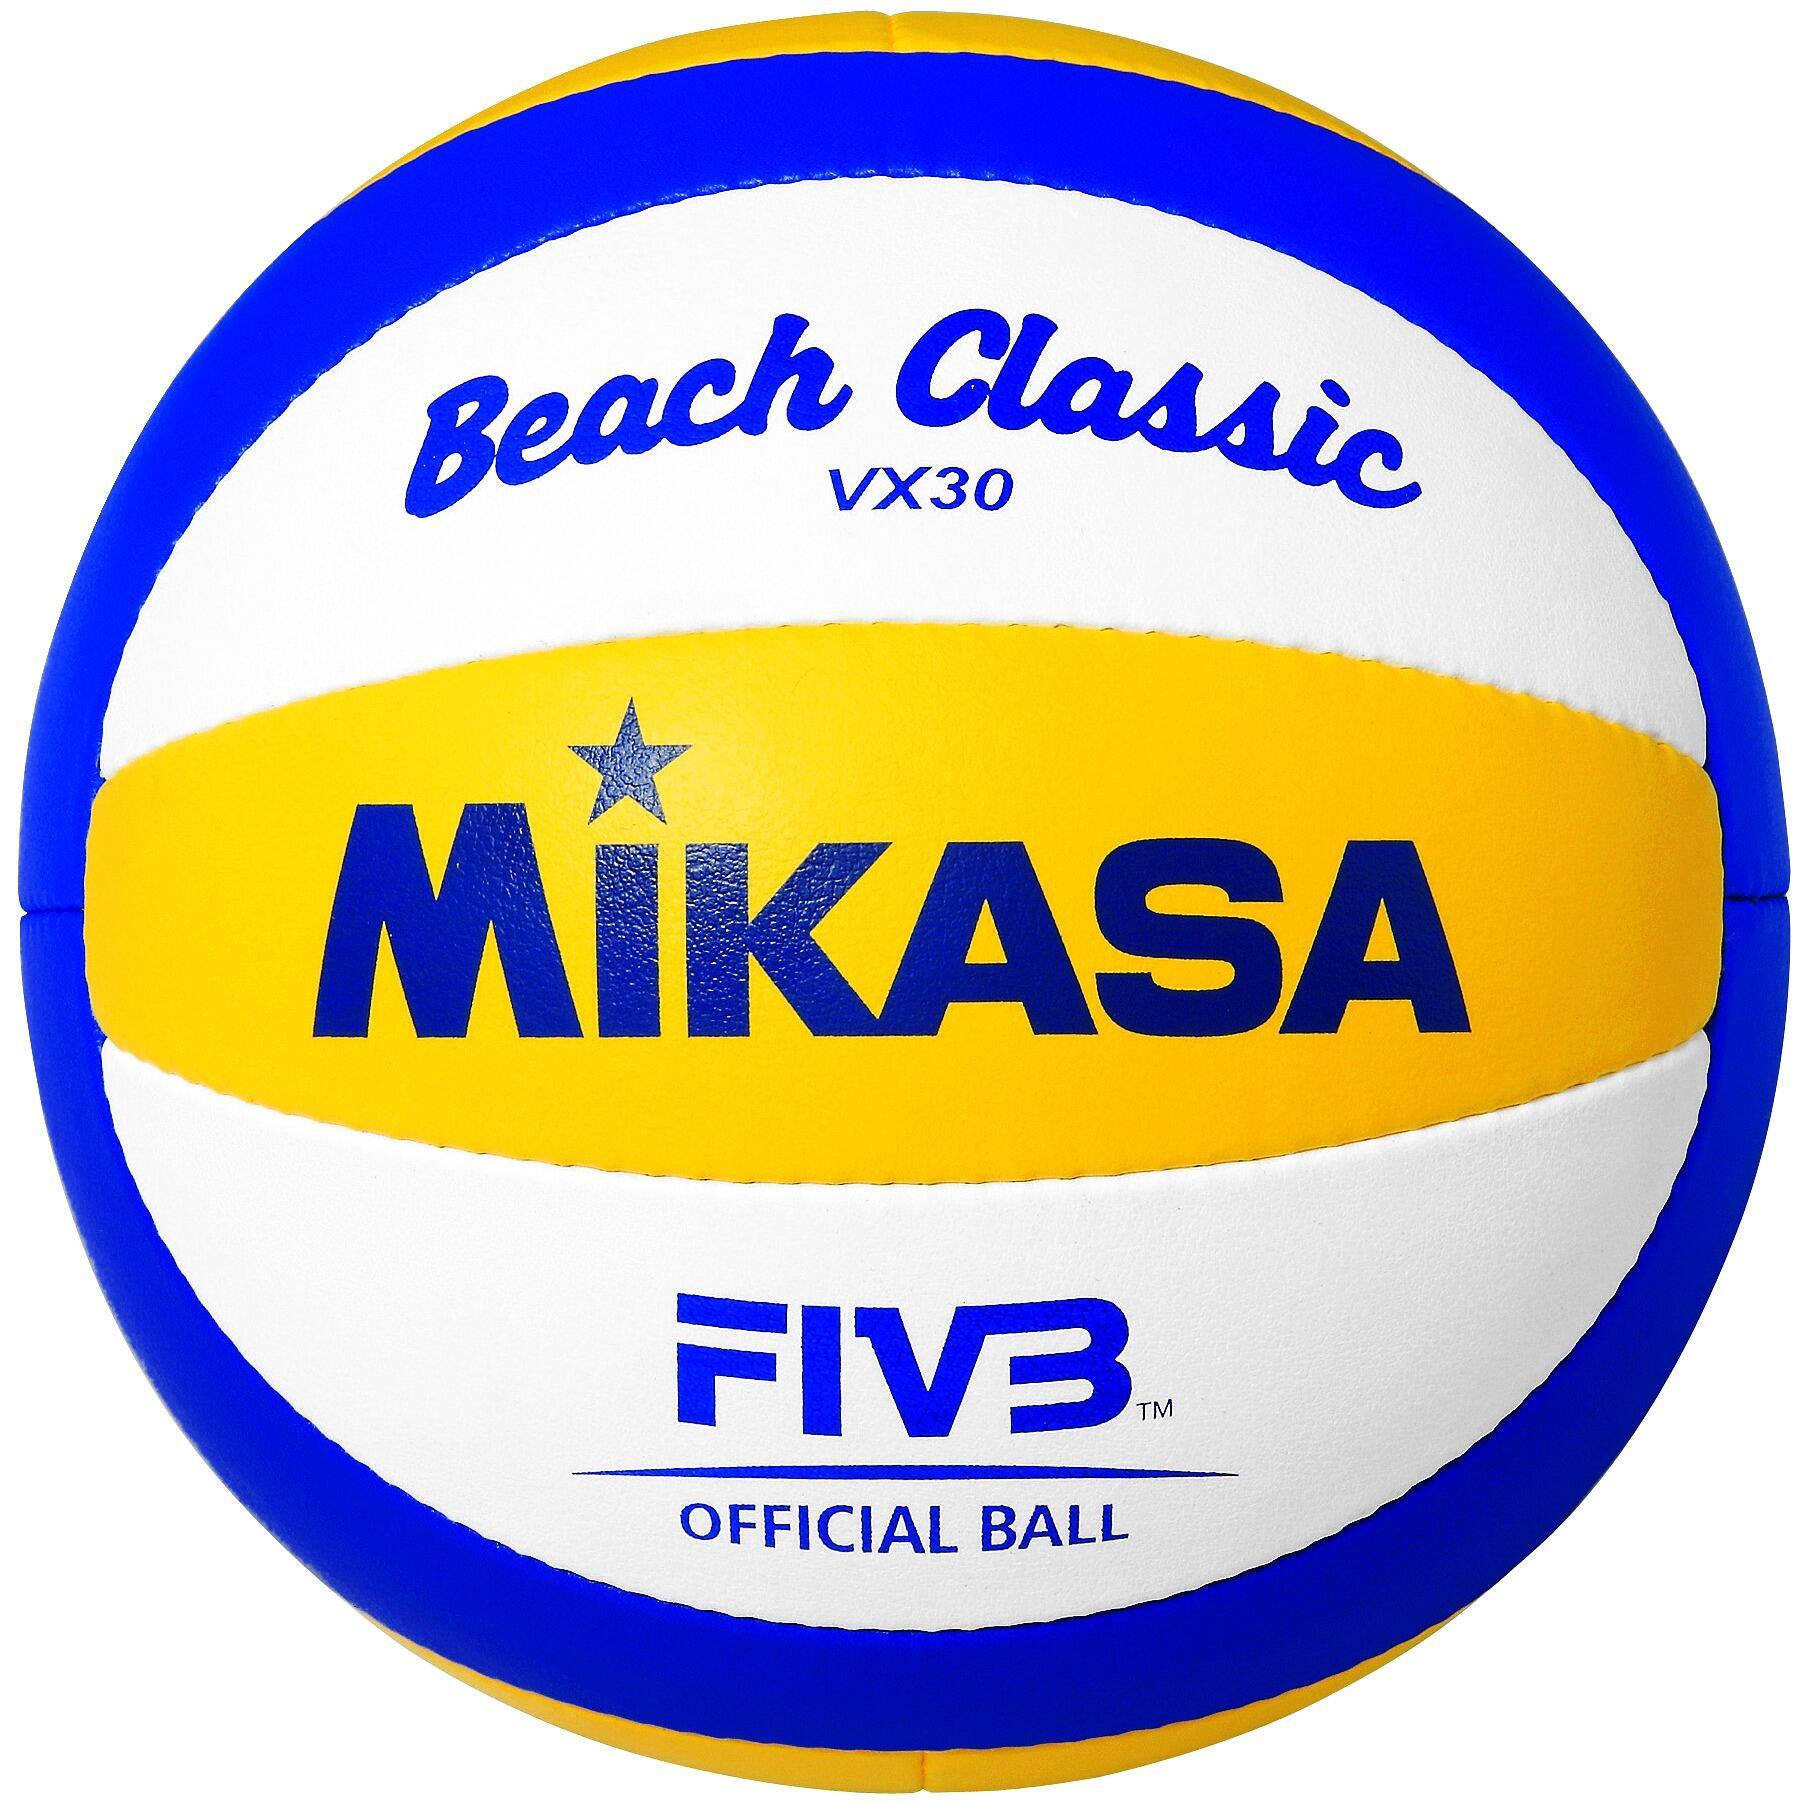 Mikasa Beach Volleyball Beach Classic VX30, красочный original mikasa kids volleyball vs170w fivb official inspected eva sponge material child soft ball mikasa volleyball